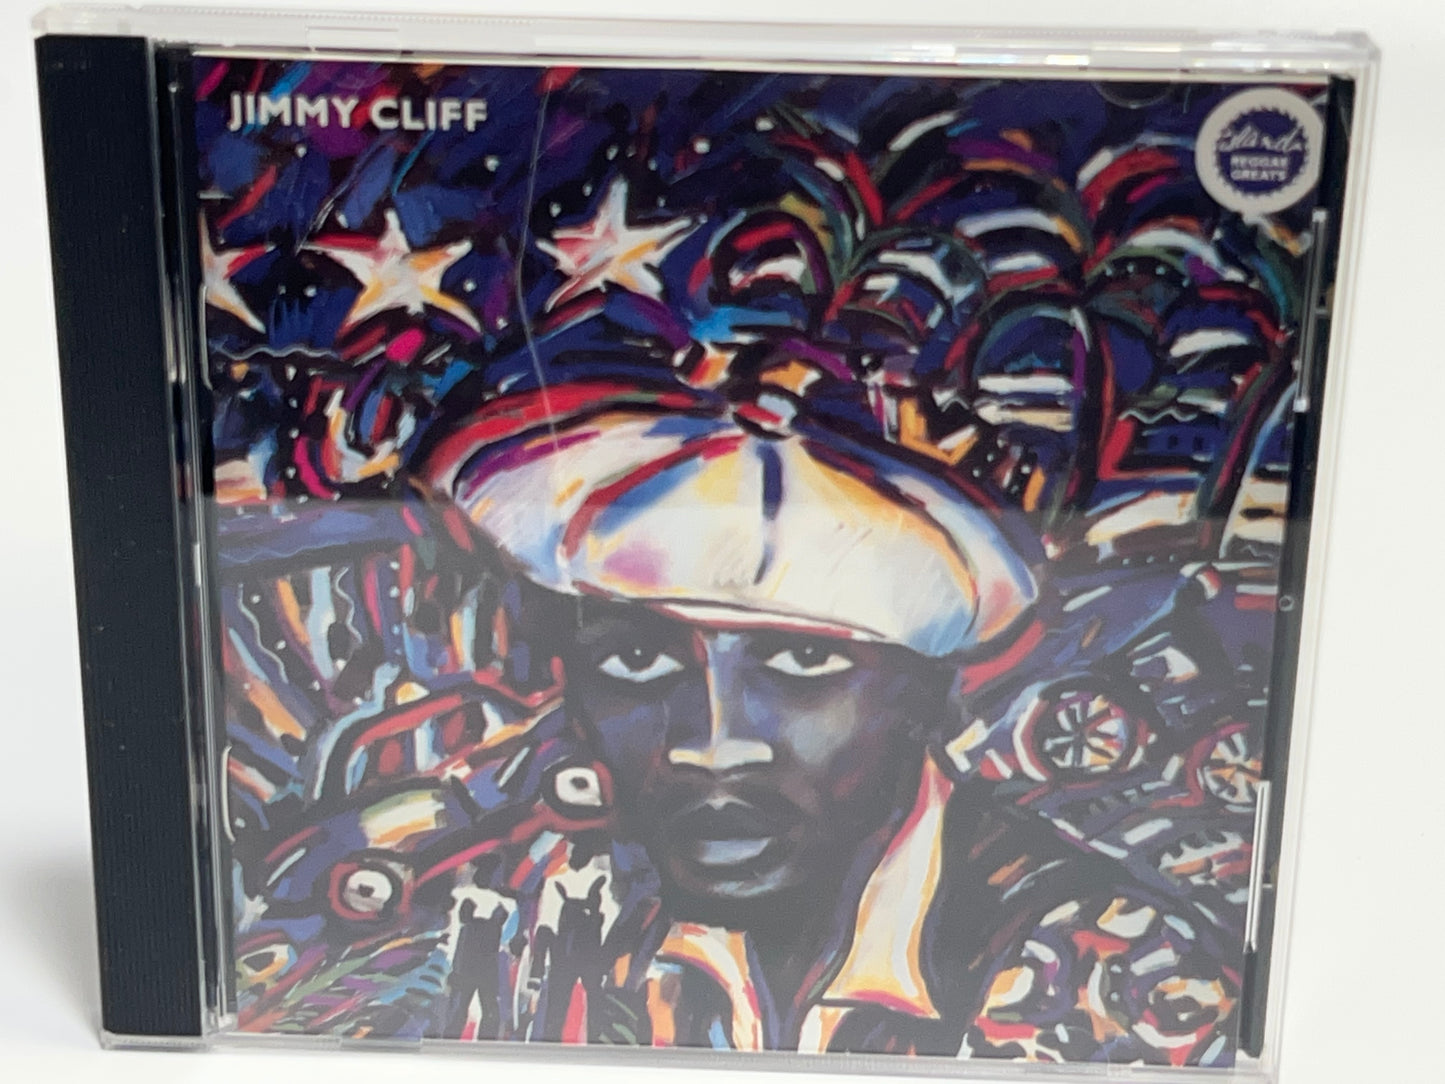 Jimmy Cliff ~ Reggae Greats ~ (CD, Best of Greatest Hits Mango)